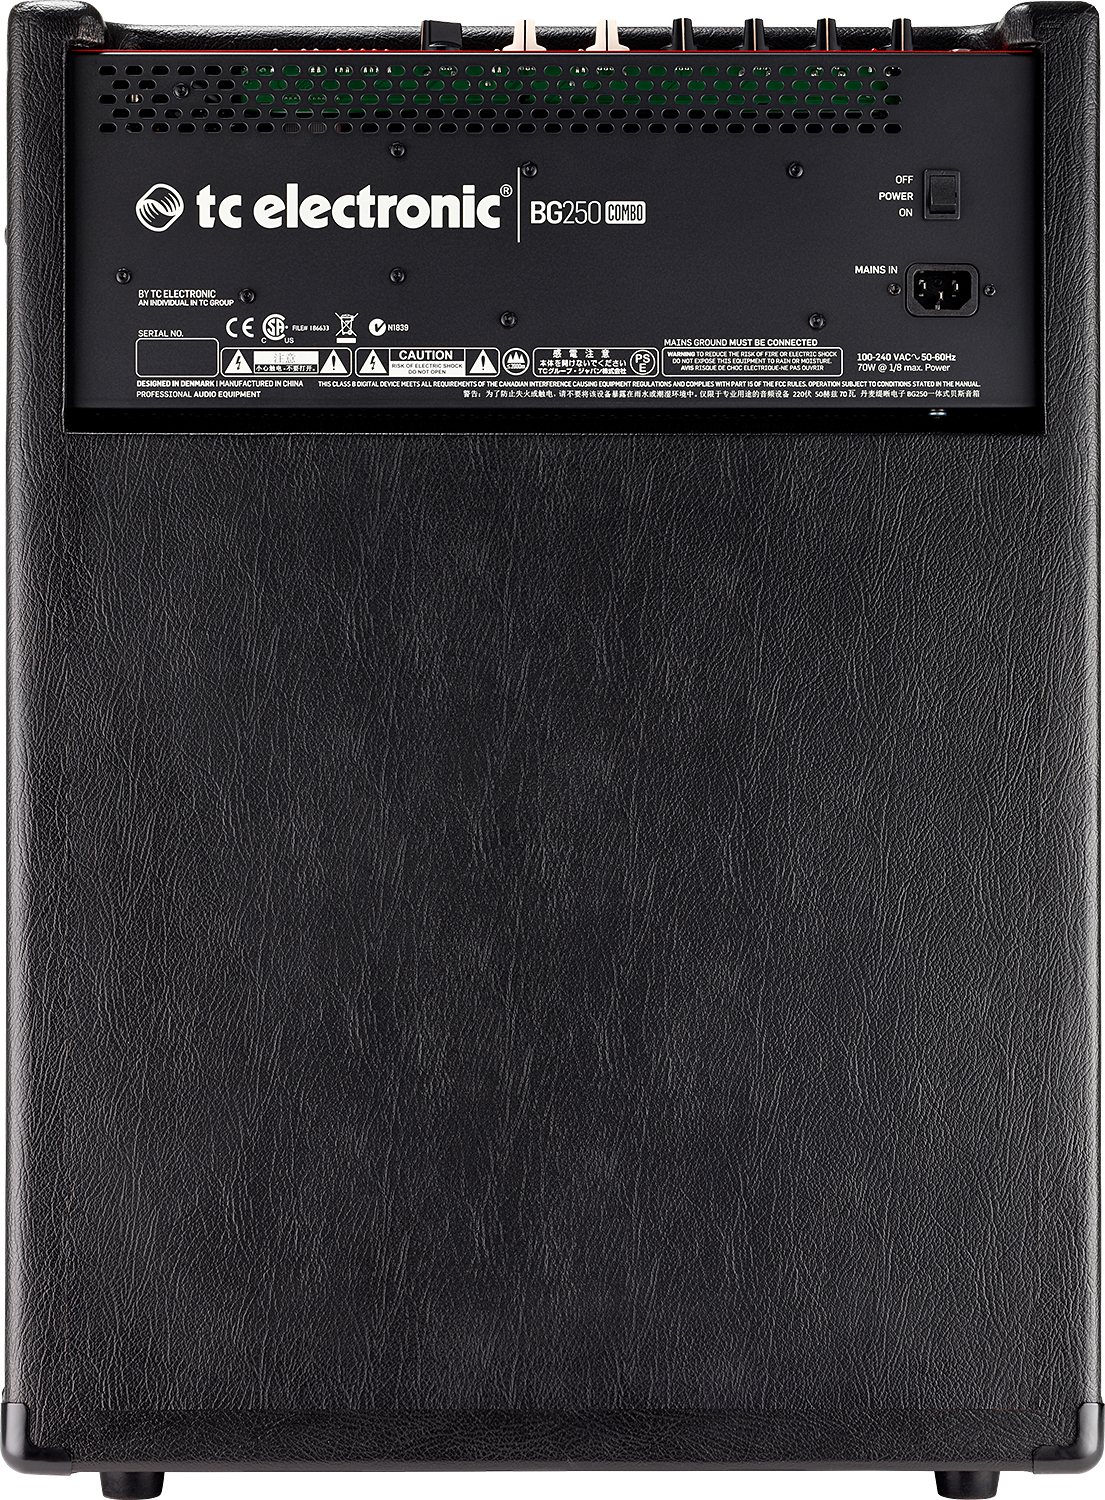 Tc Electronic Bg250 115 Mkii 2013 250w 1x15 - Combo amplificador para bajo - Variation 1